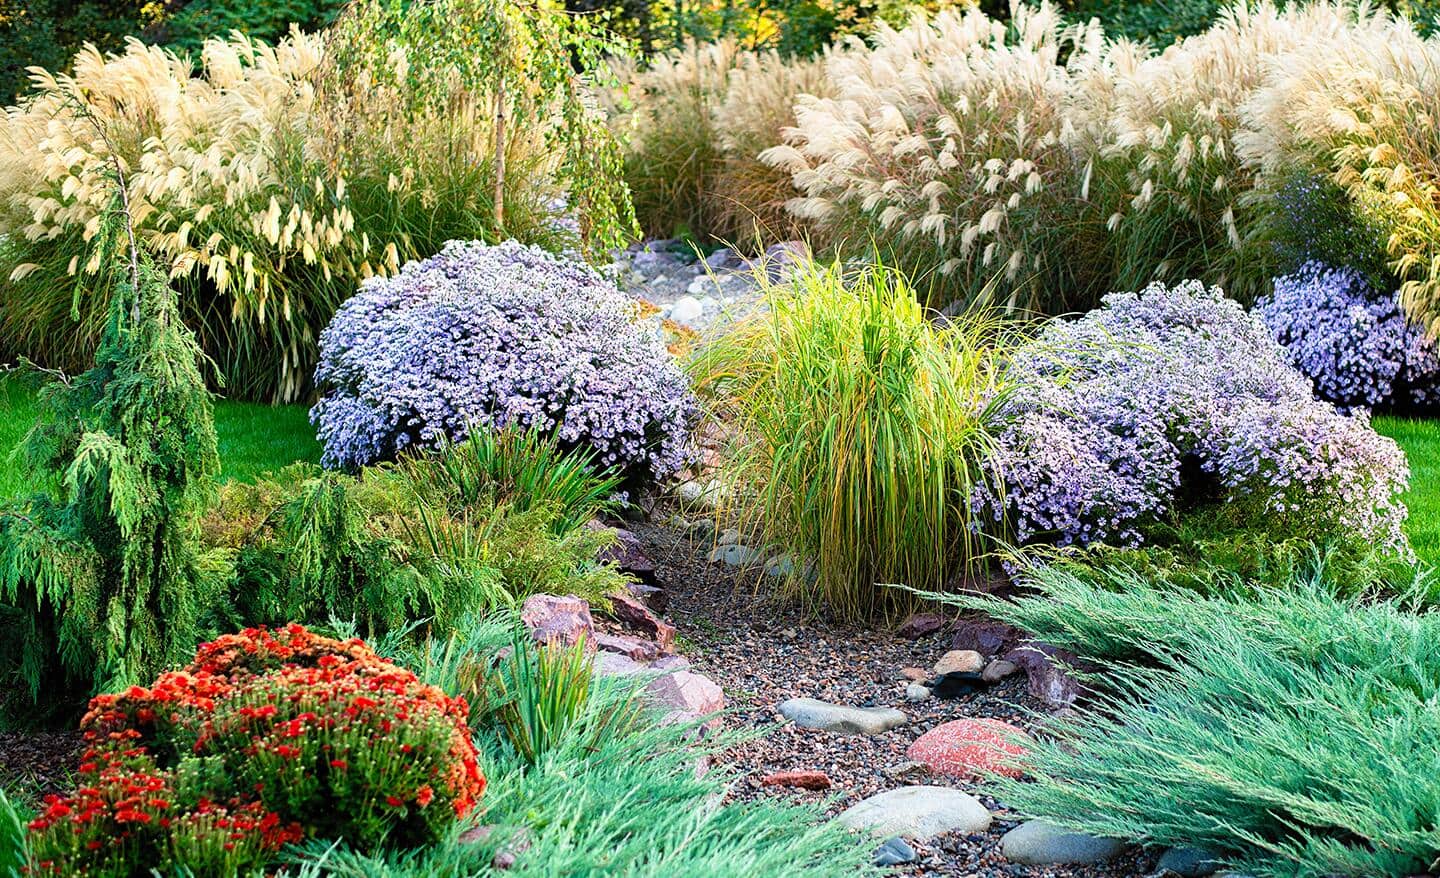 A summer garden with ornamental grasses and perennials